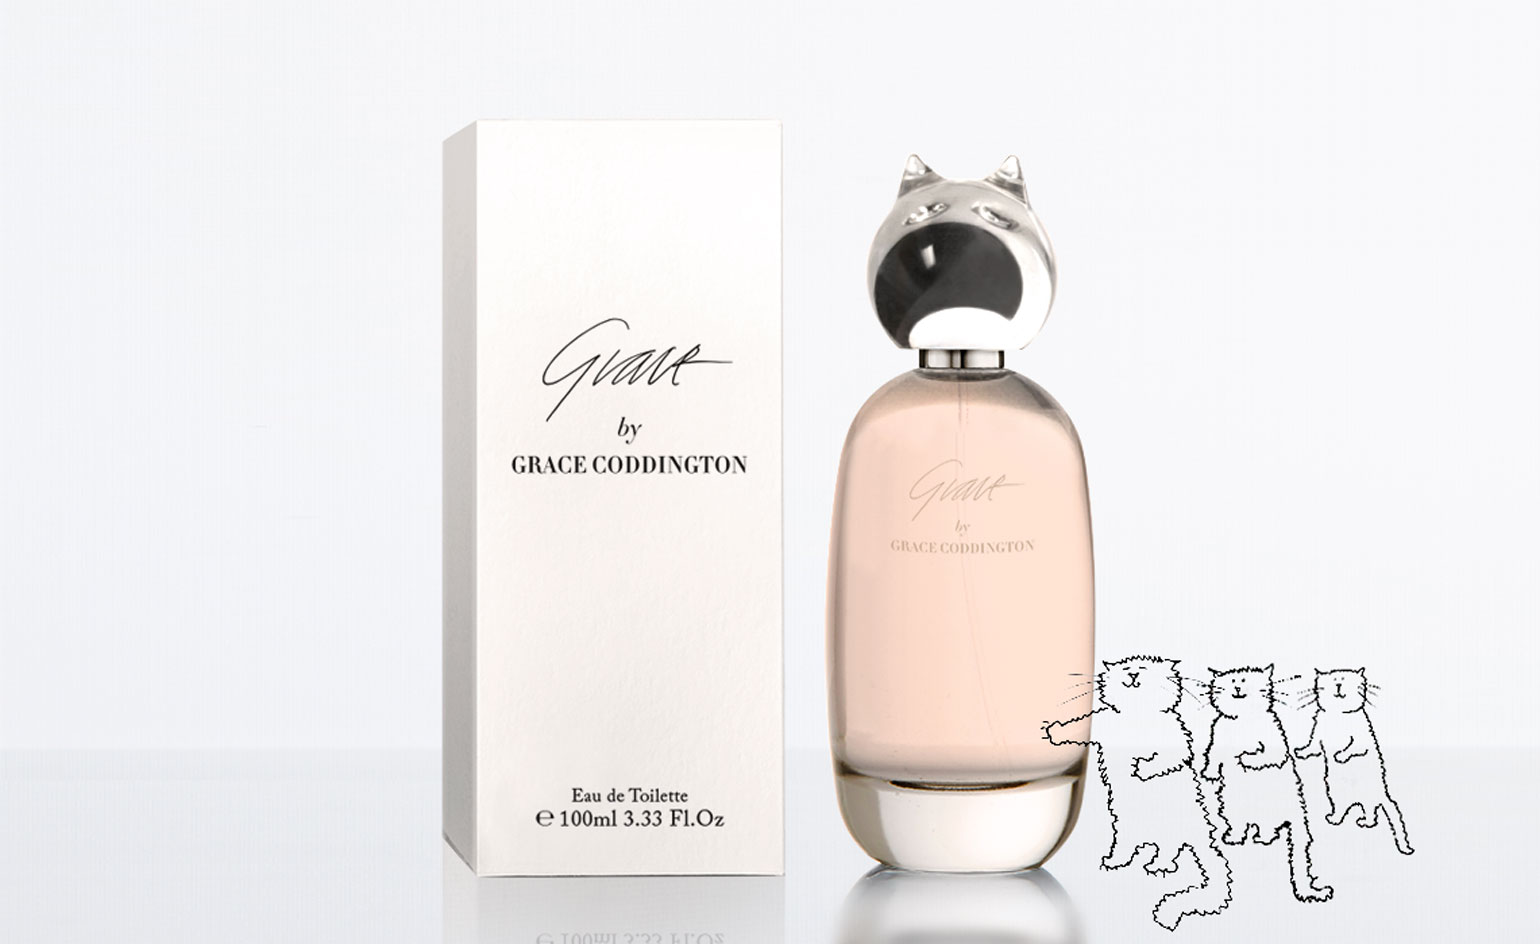 Nowy zapach od Comme des Garçons: Grace by Grace Coddington